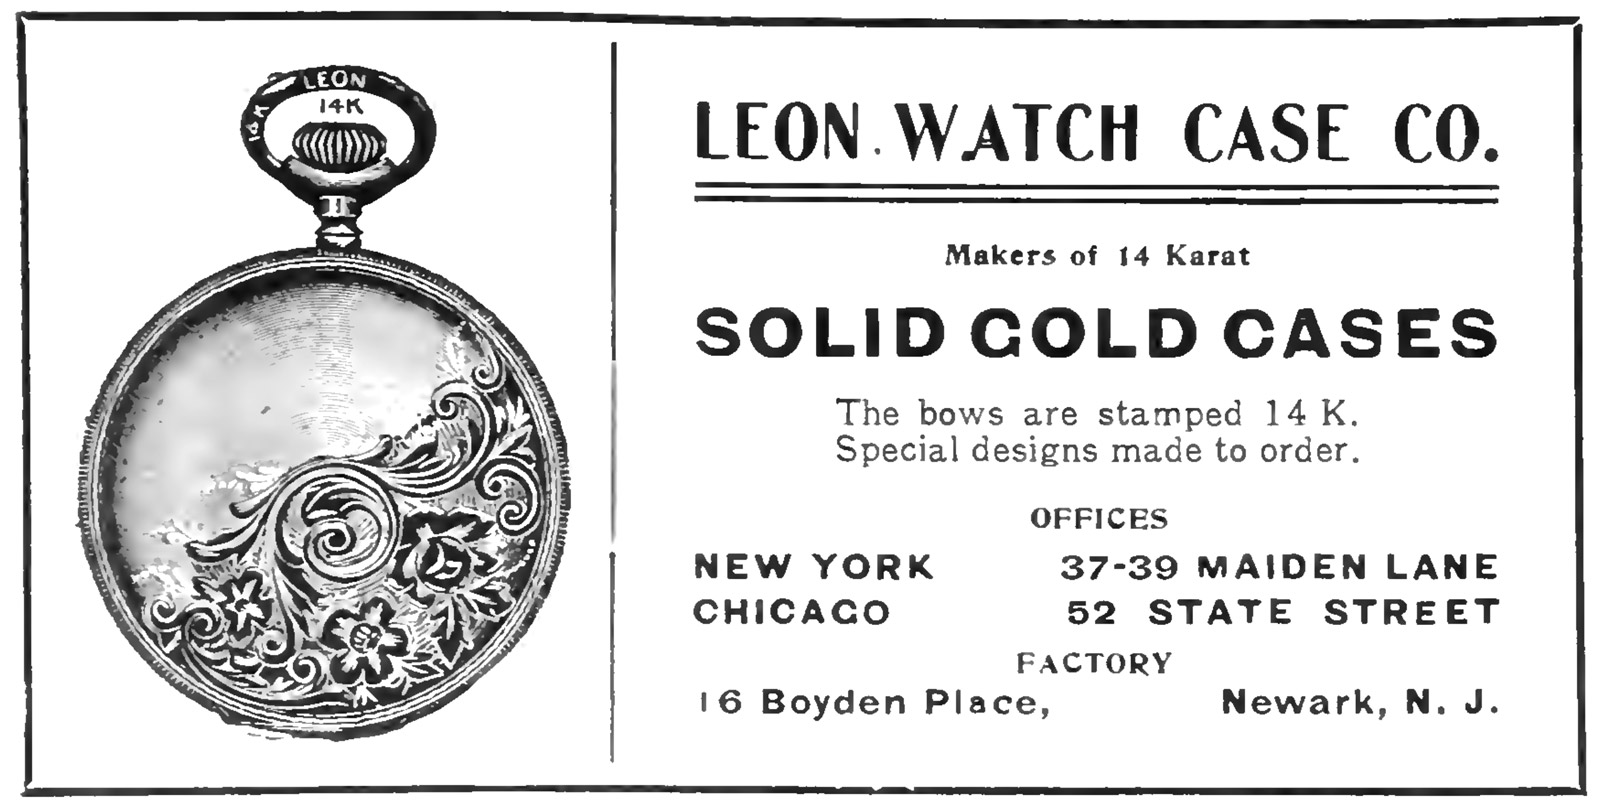 Leon Watch Case Co. Image